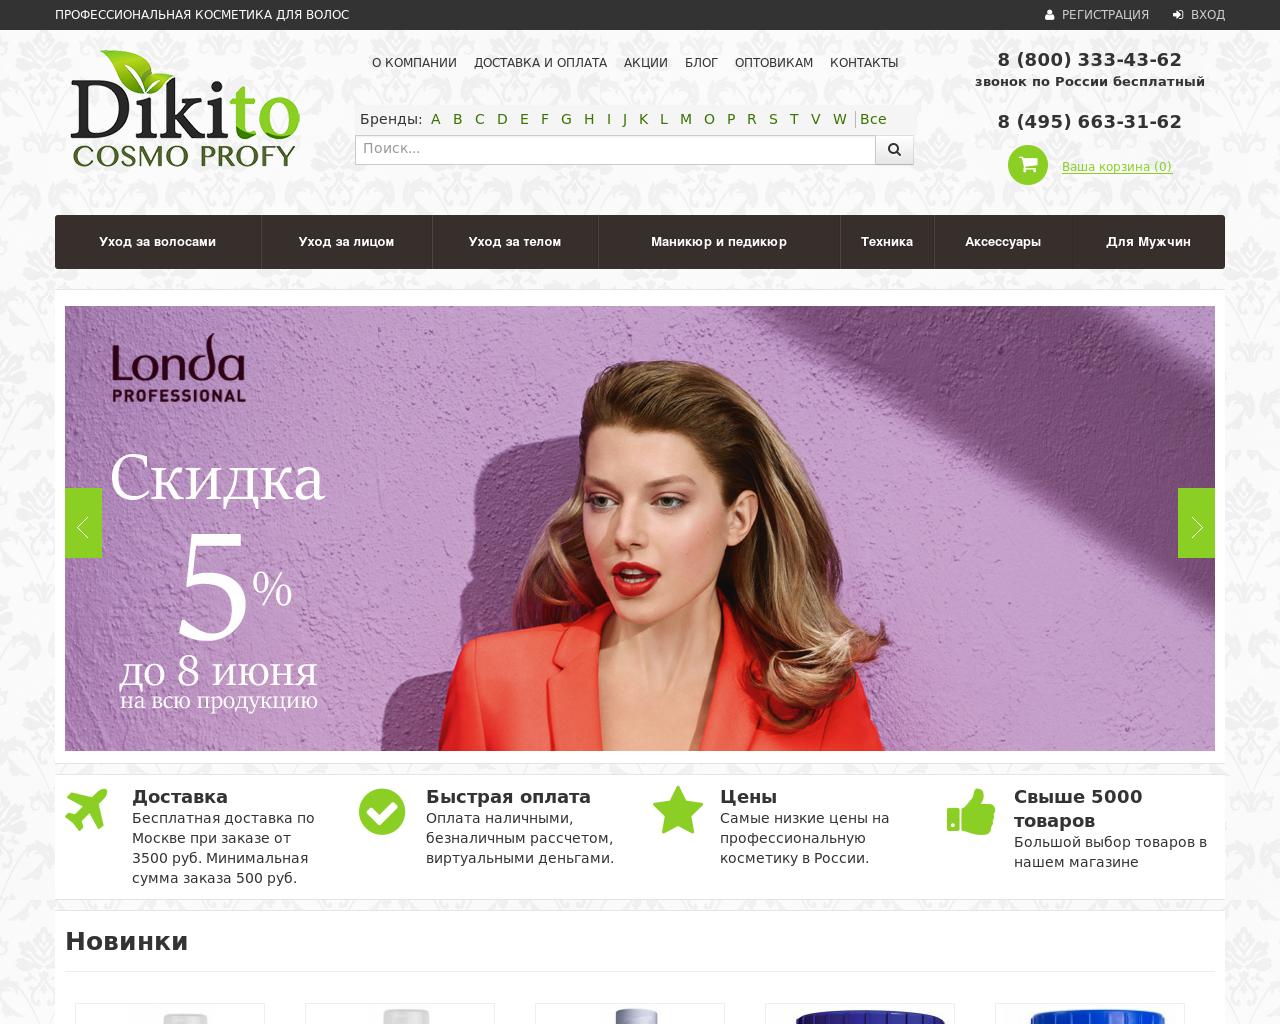 Изображение сайта dikito.ru в разрешении 1280x1024